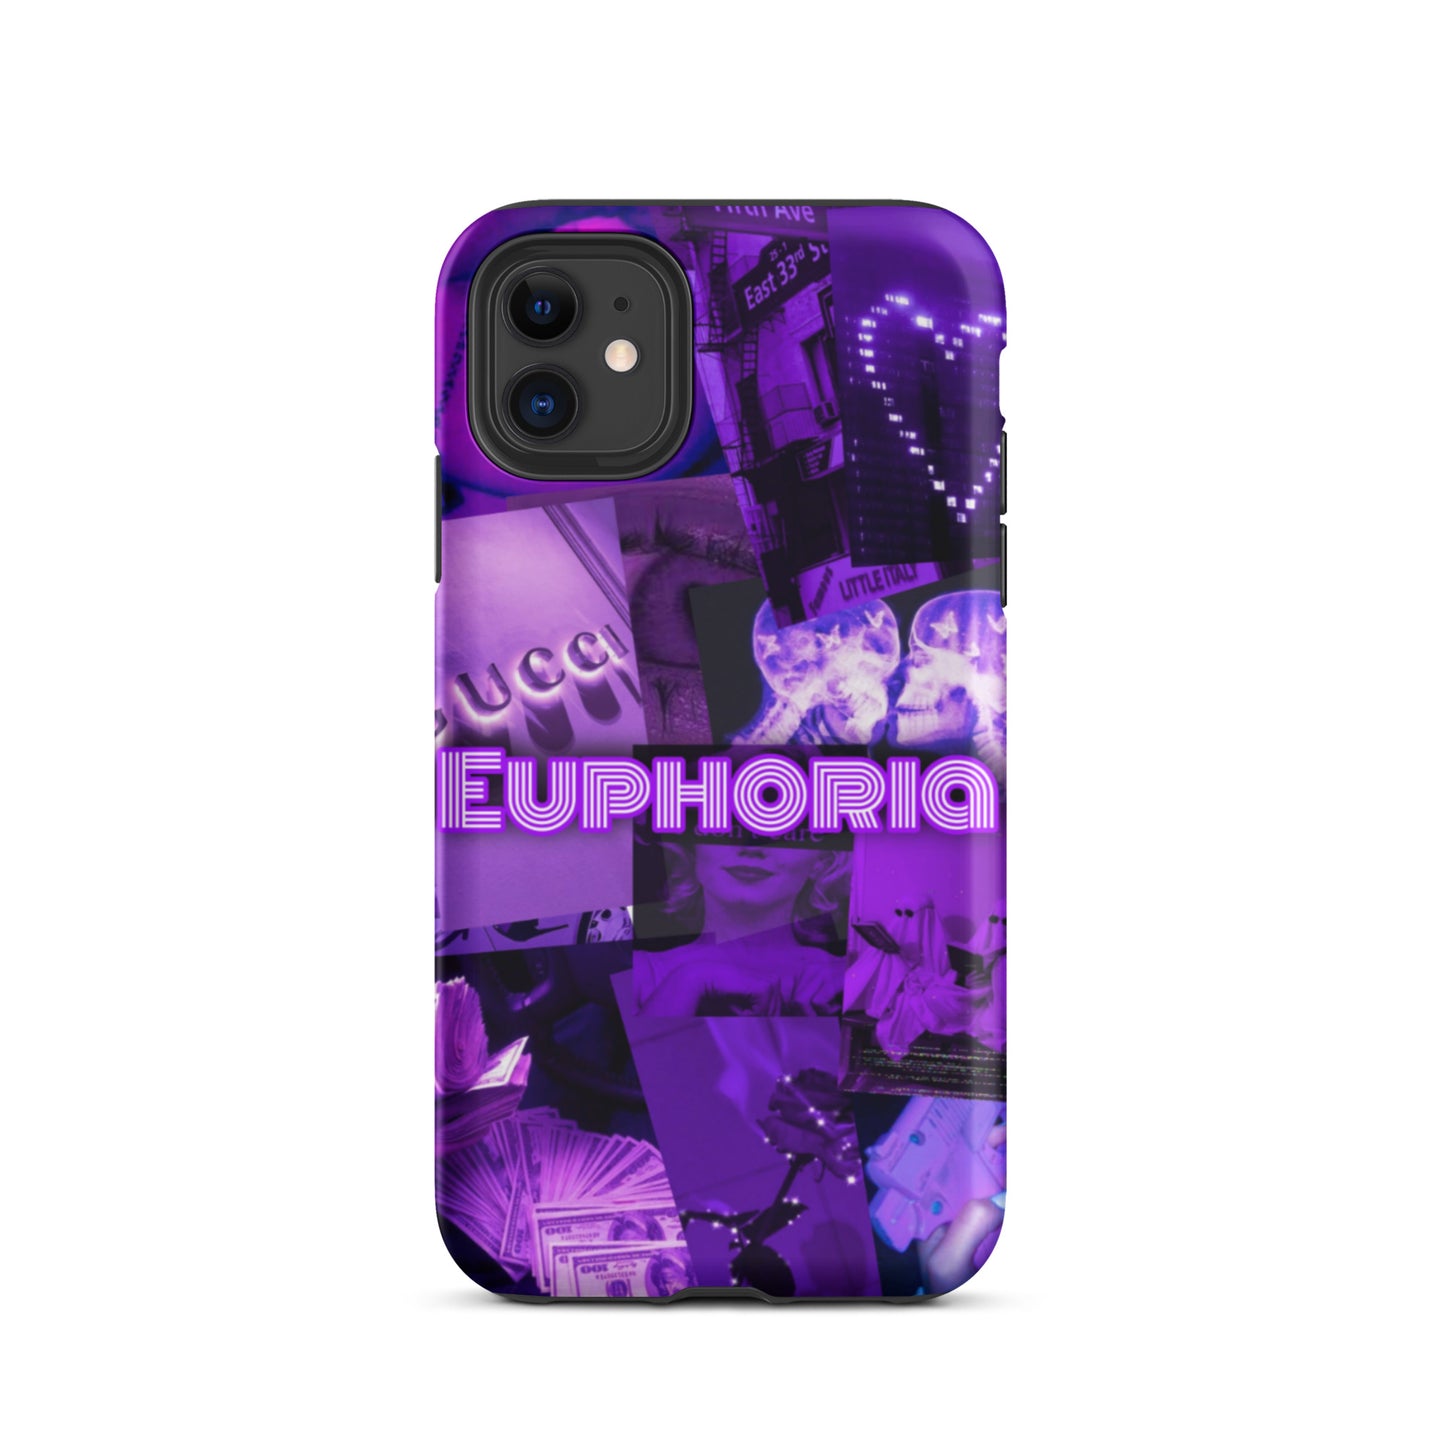 Euphoria- Hard Case for iPhone®